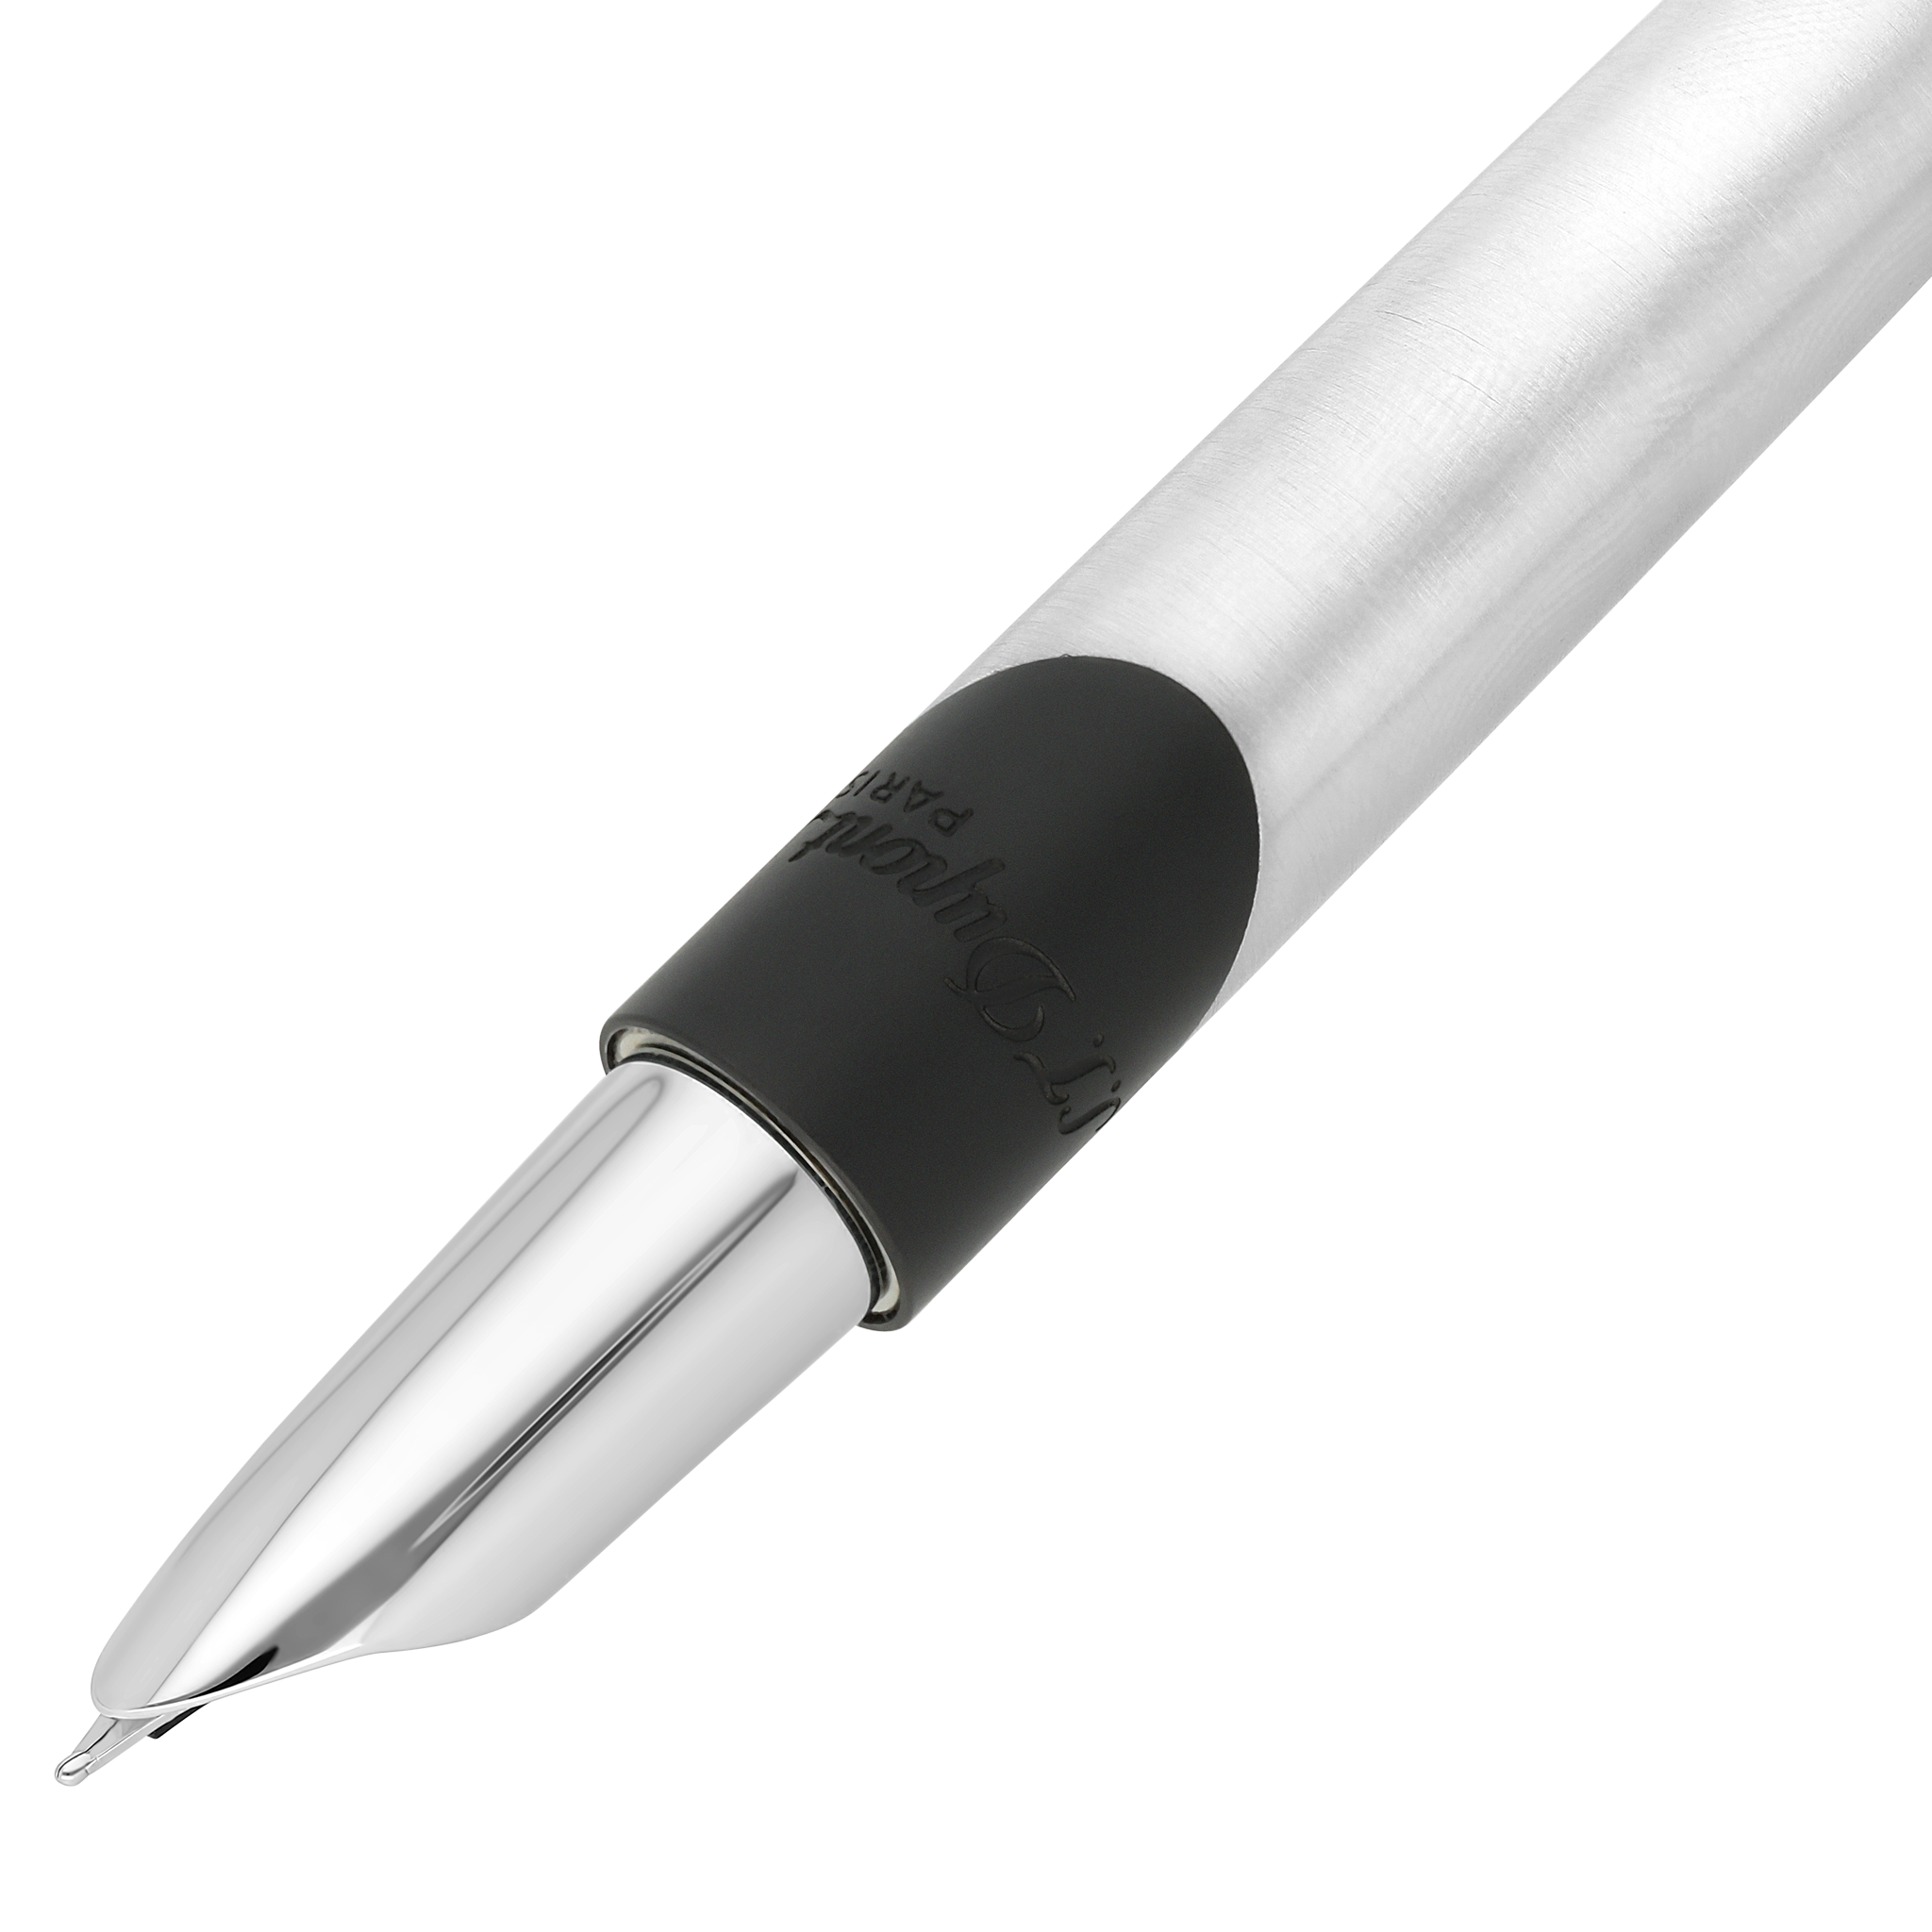 Défi Millenium brushed chrome and matt black fountain pen